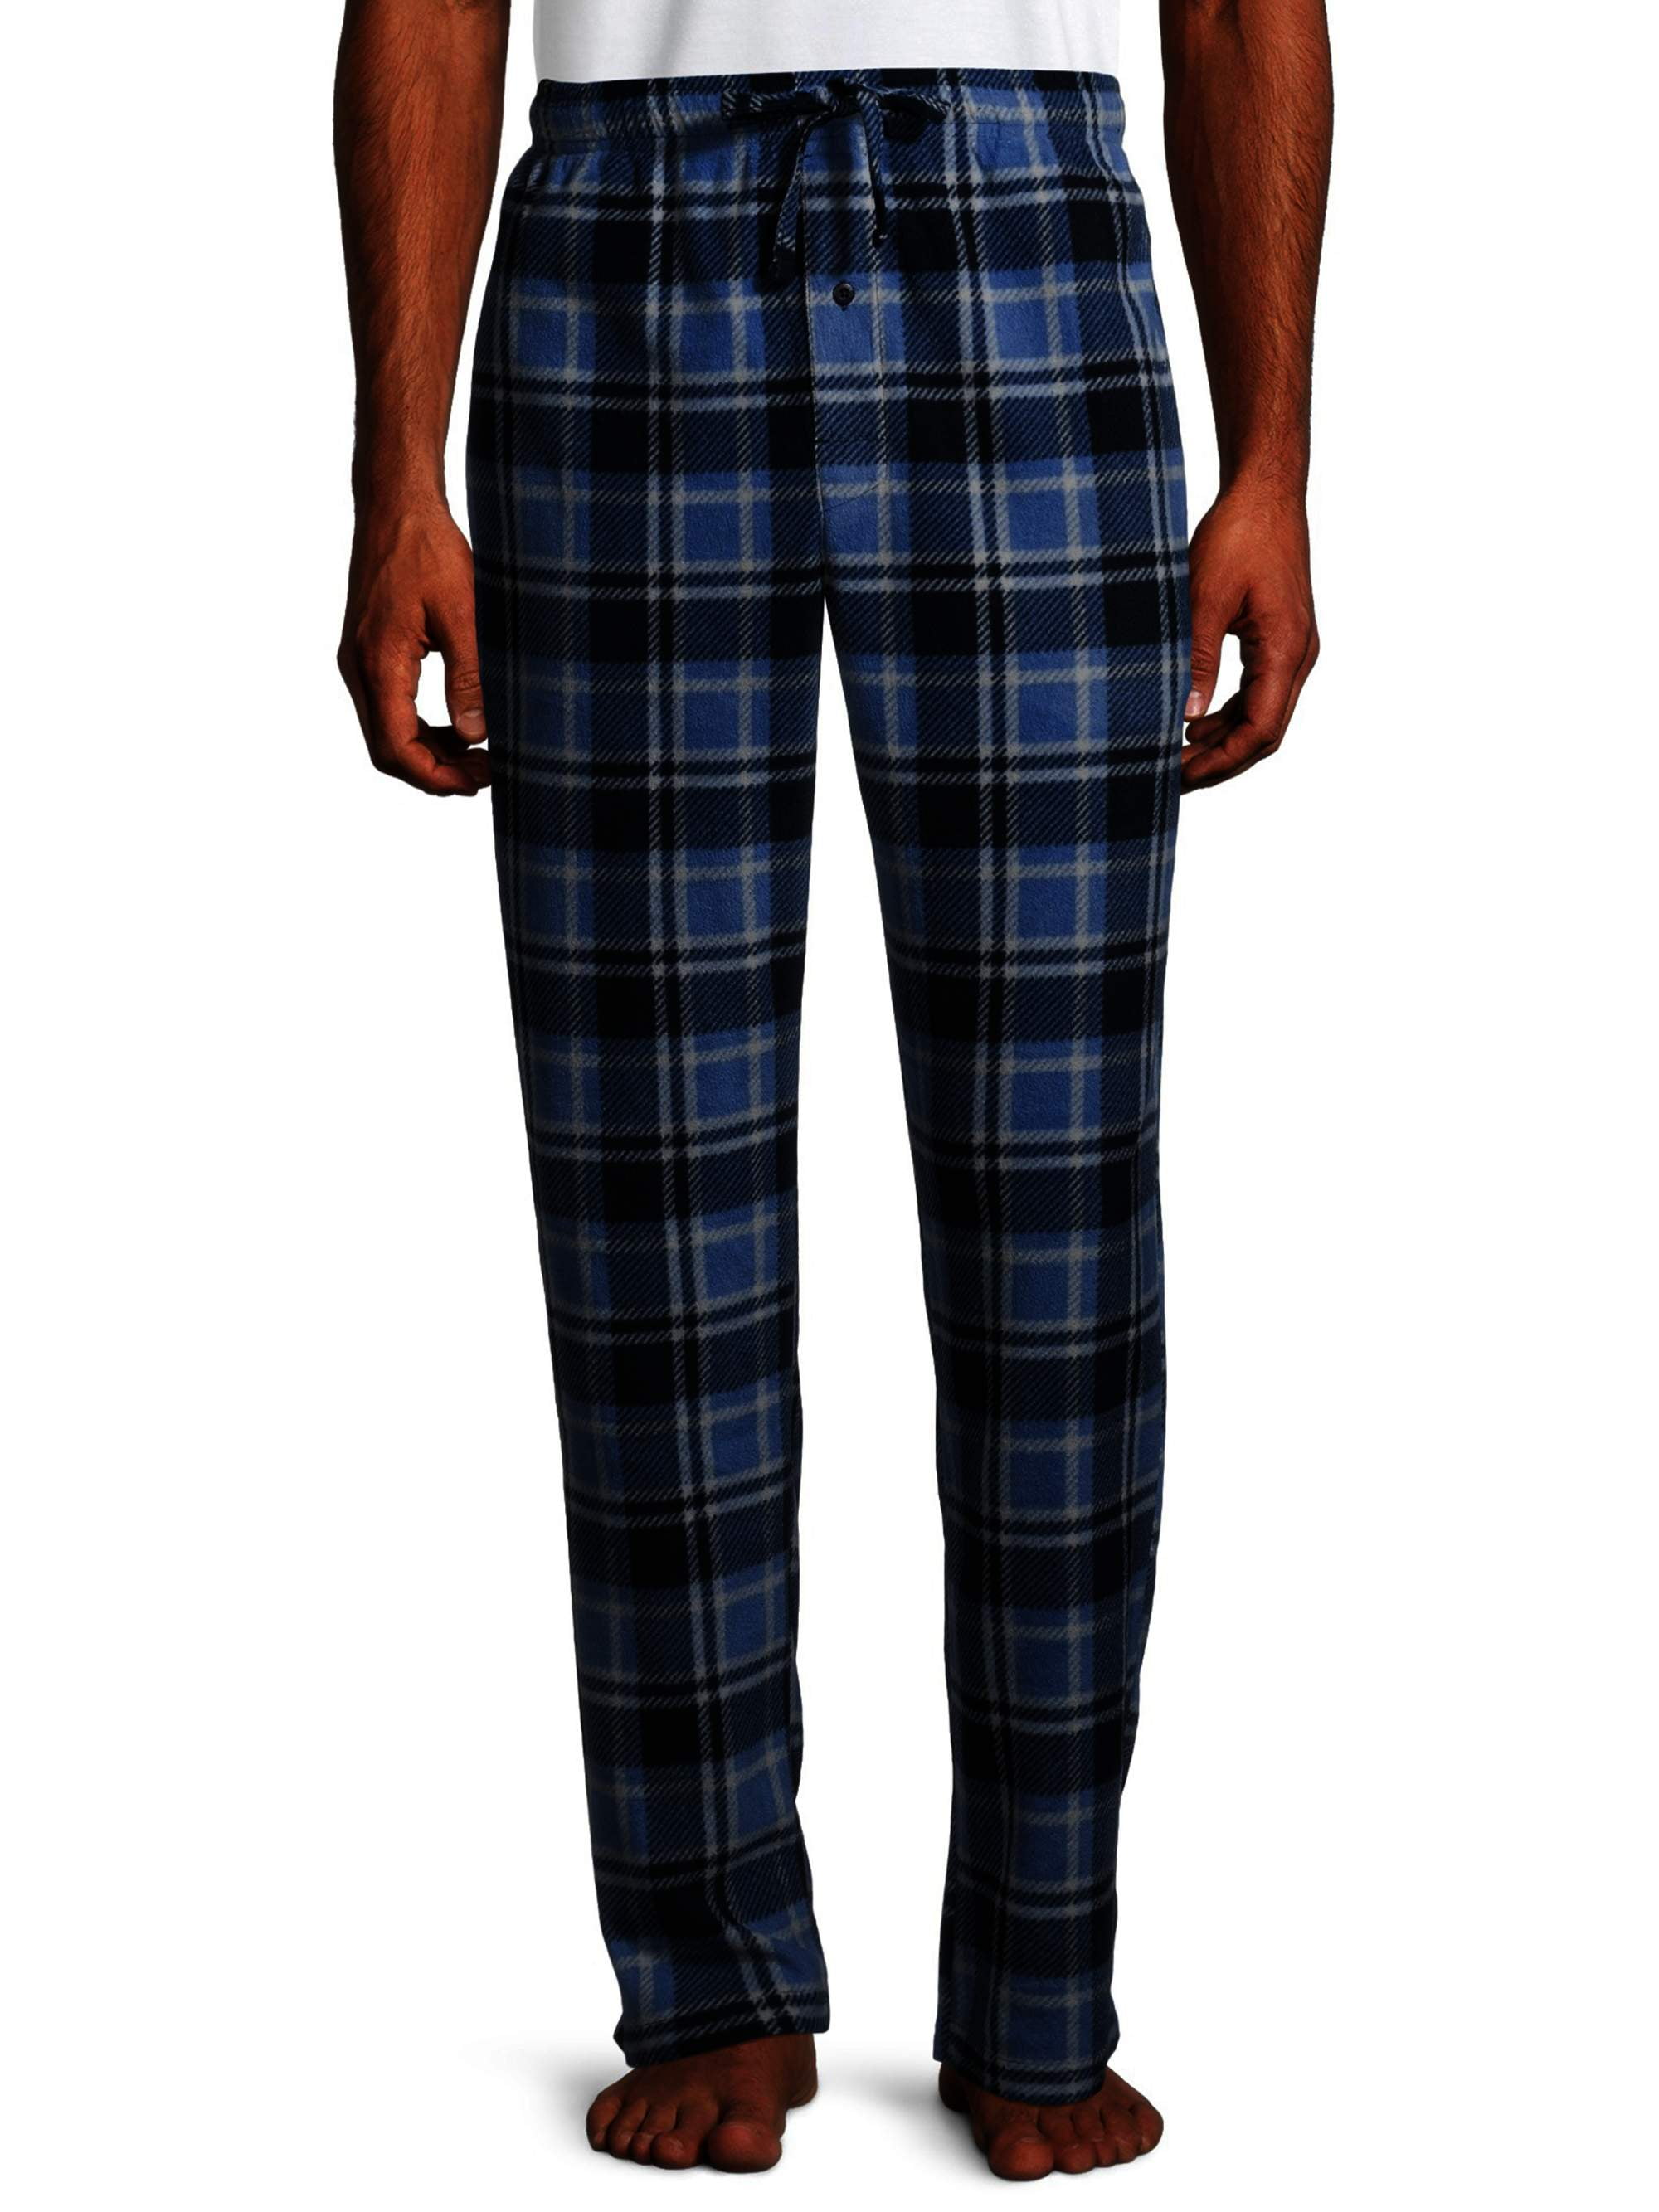 Izod Mens Microfleece Pant and Jersey Knit Long Sleeve Henley Top Set Pajama Bottom